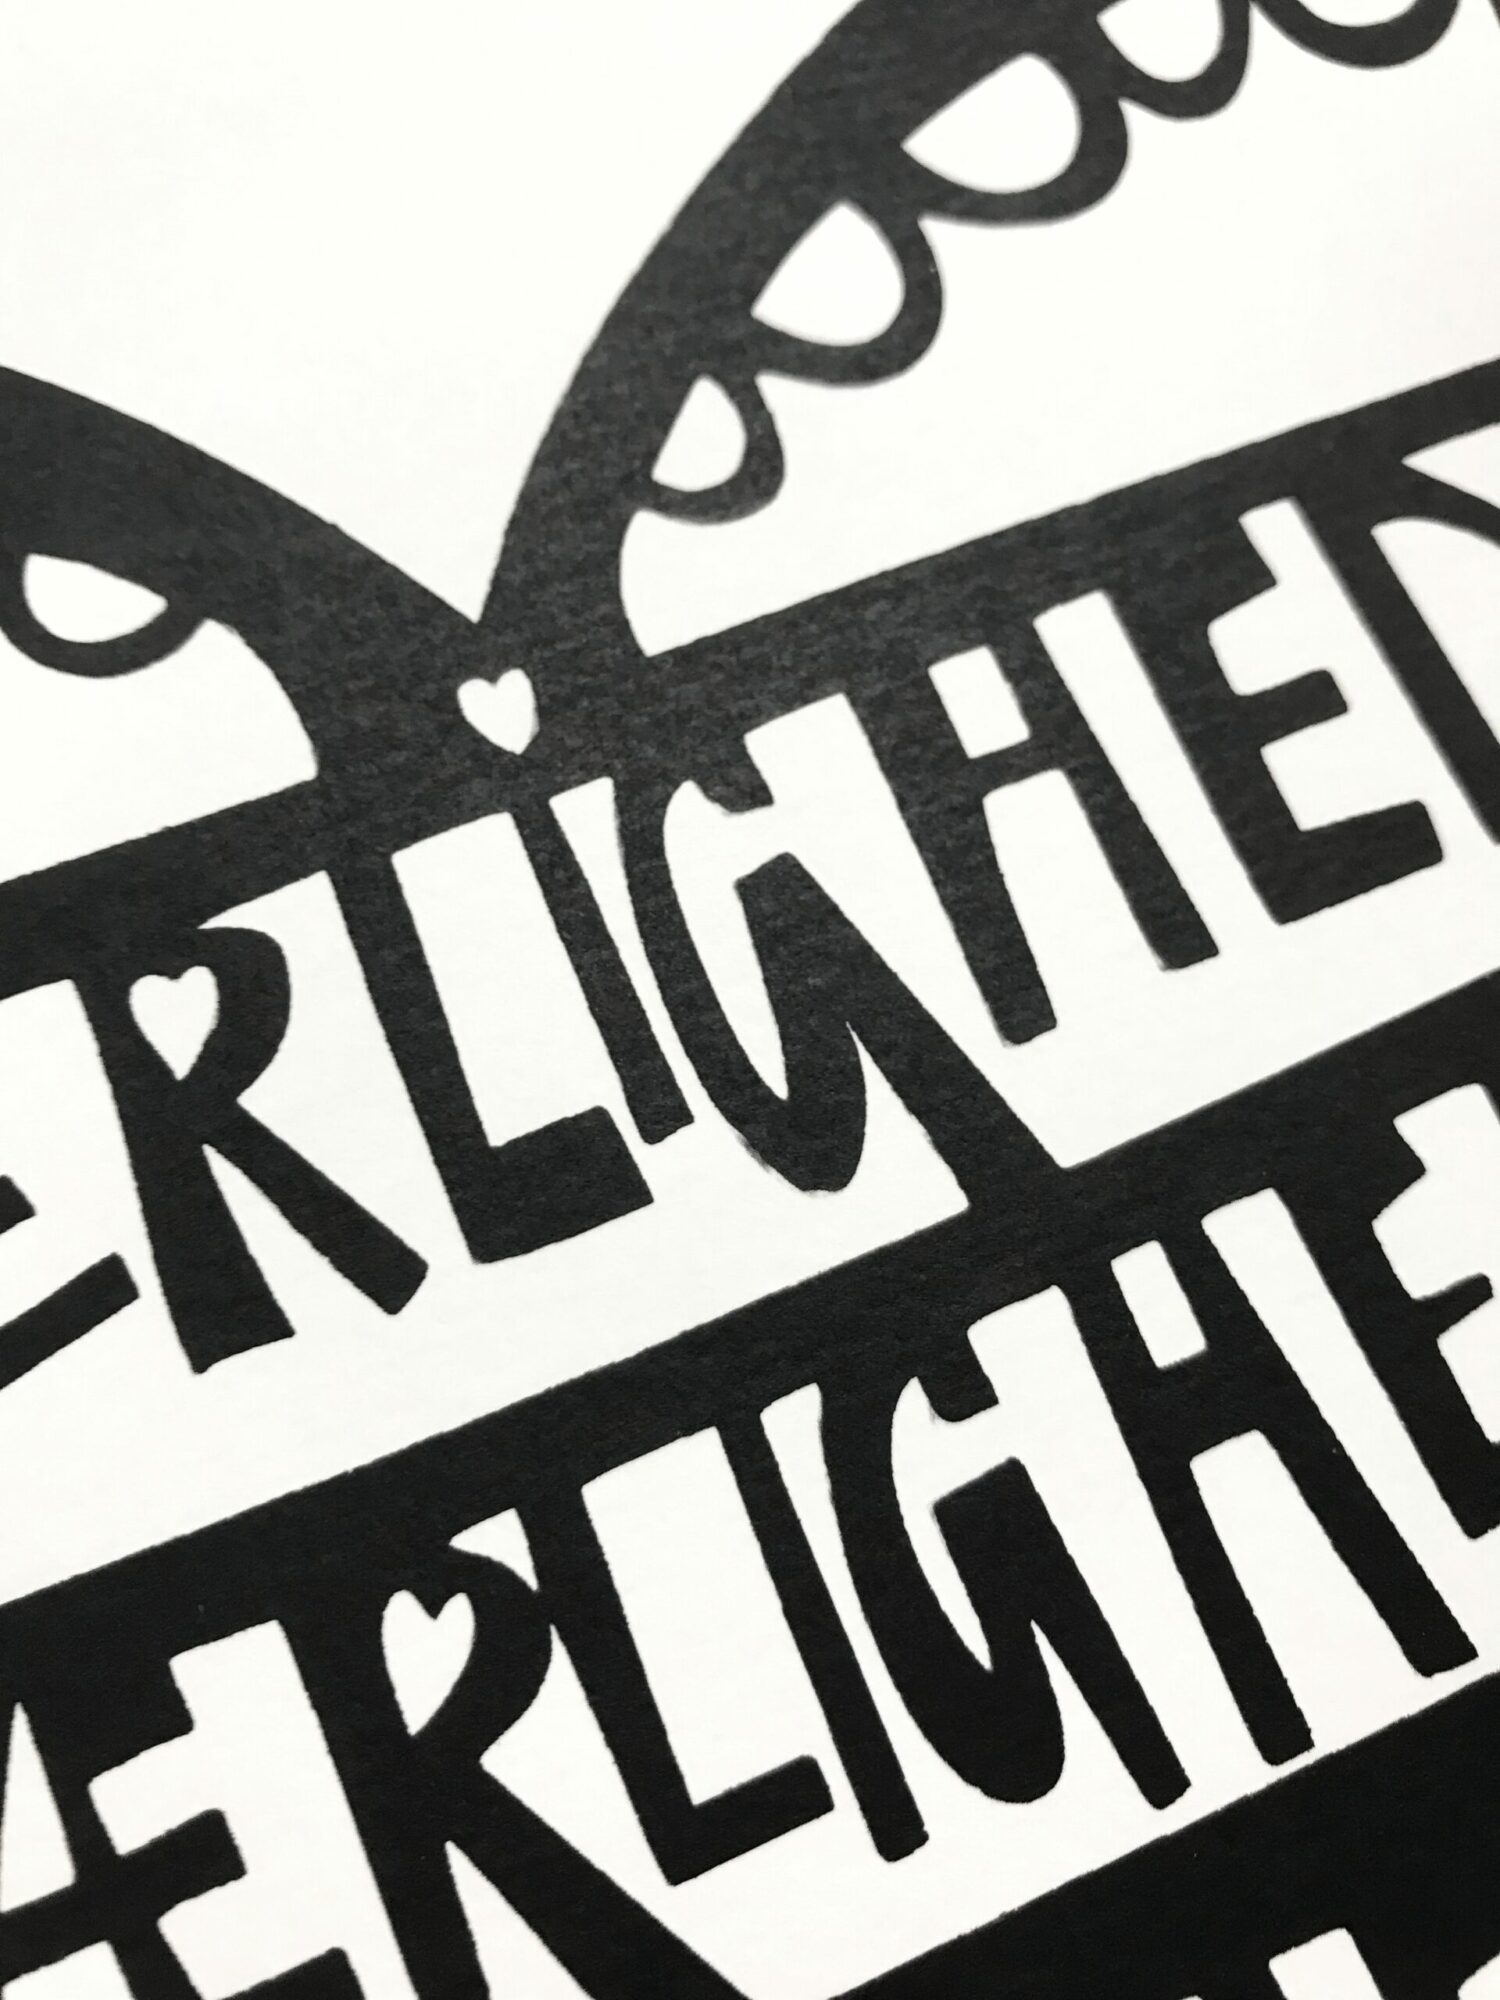 Detalje af serigrafi tryk